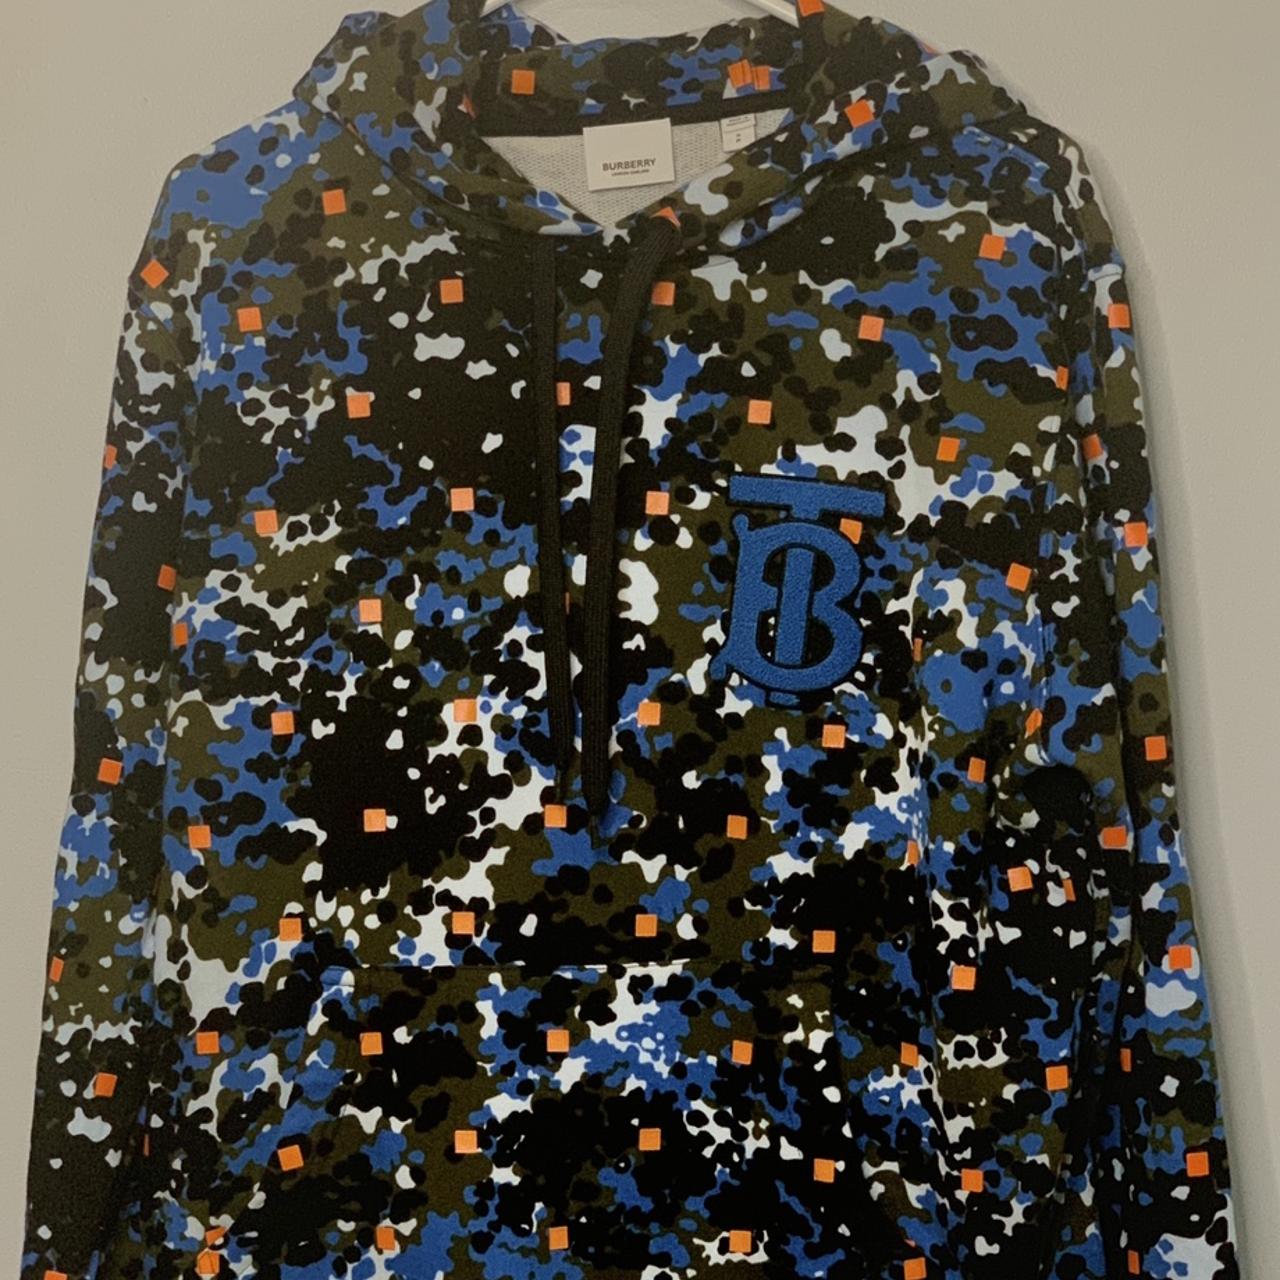 Burberry Monogram-print Sweatshirt In Blue